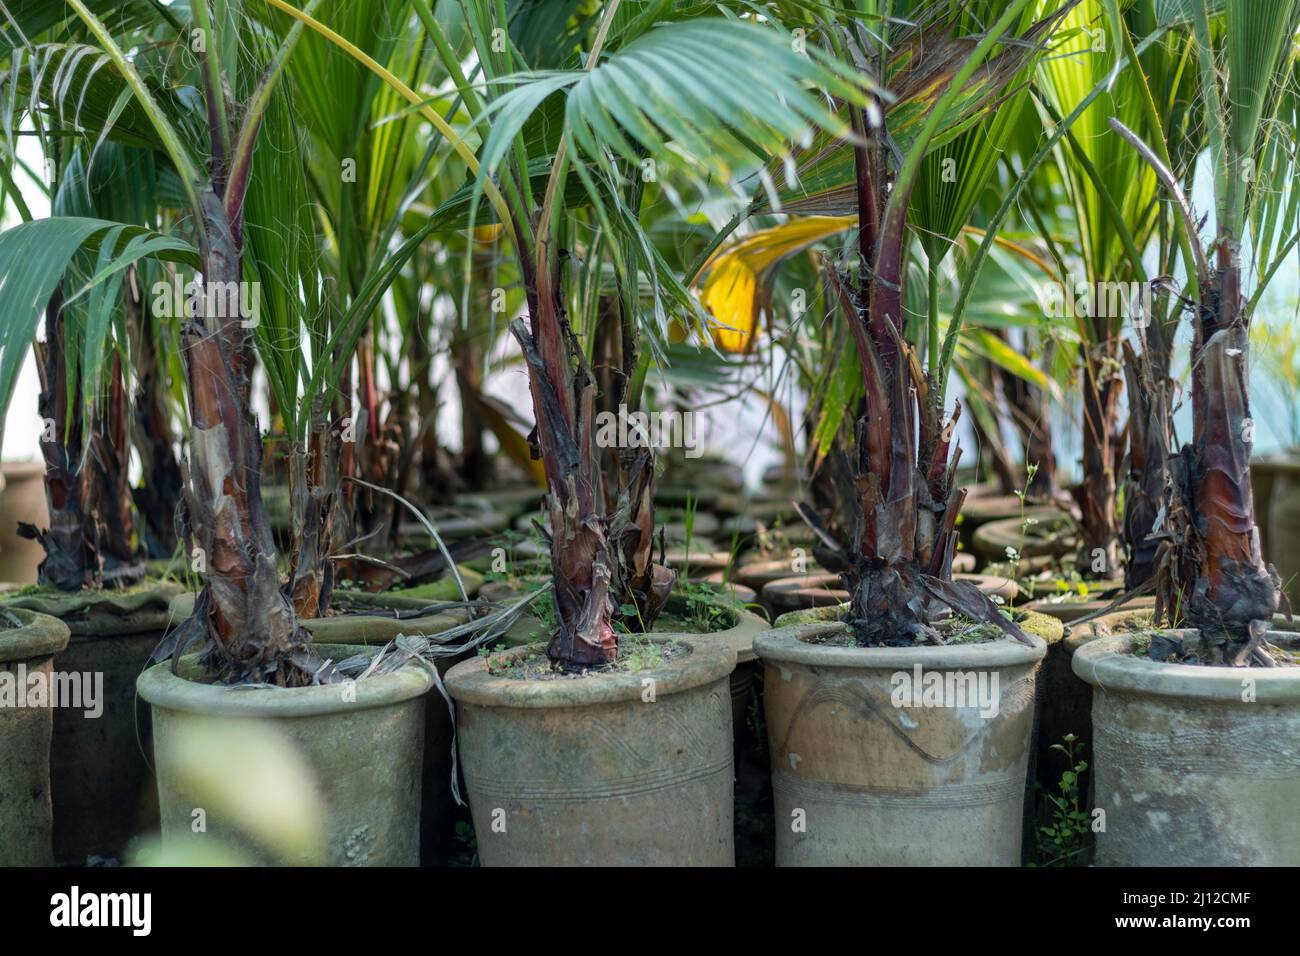 Fan palm growing in clay pots in greenhouse Stock Photo